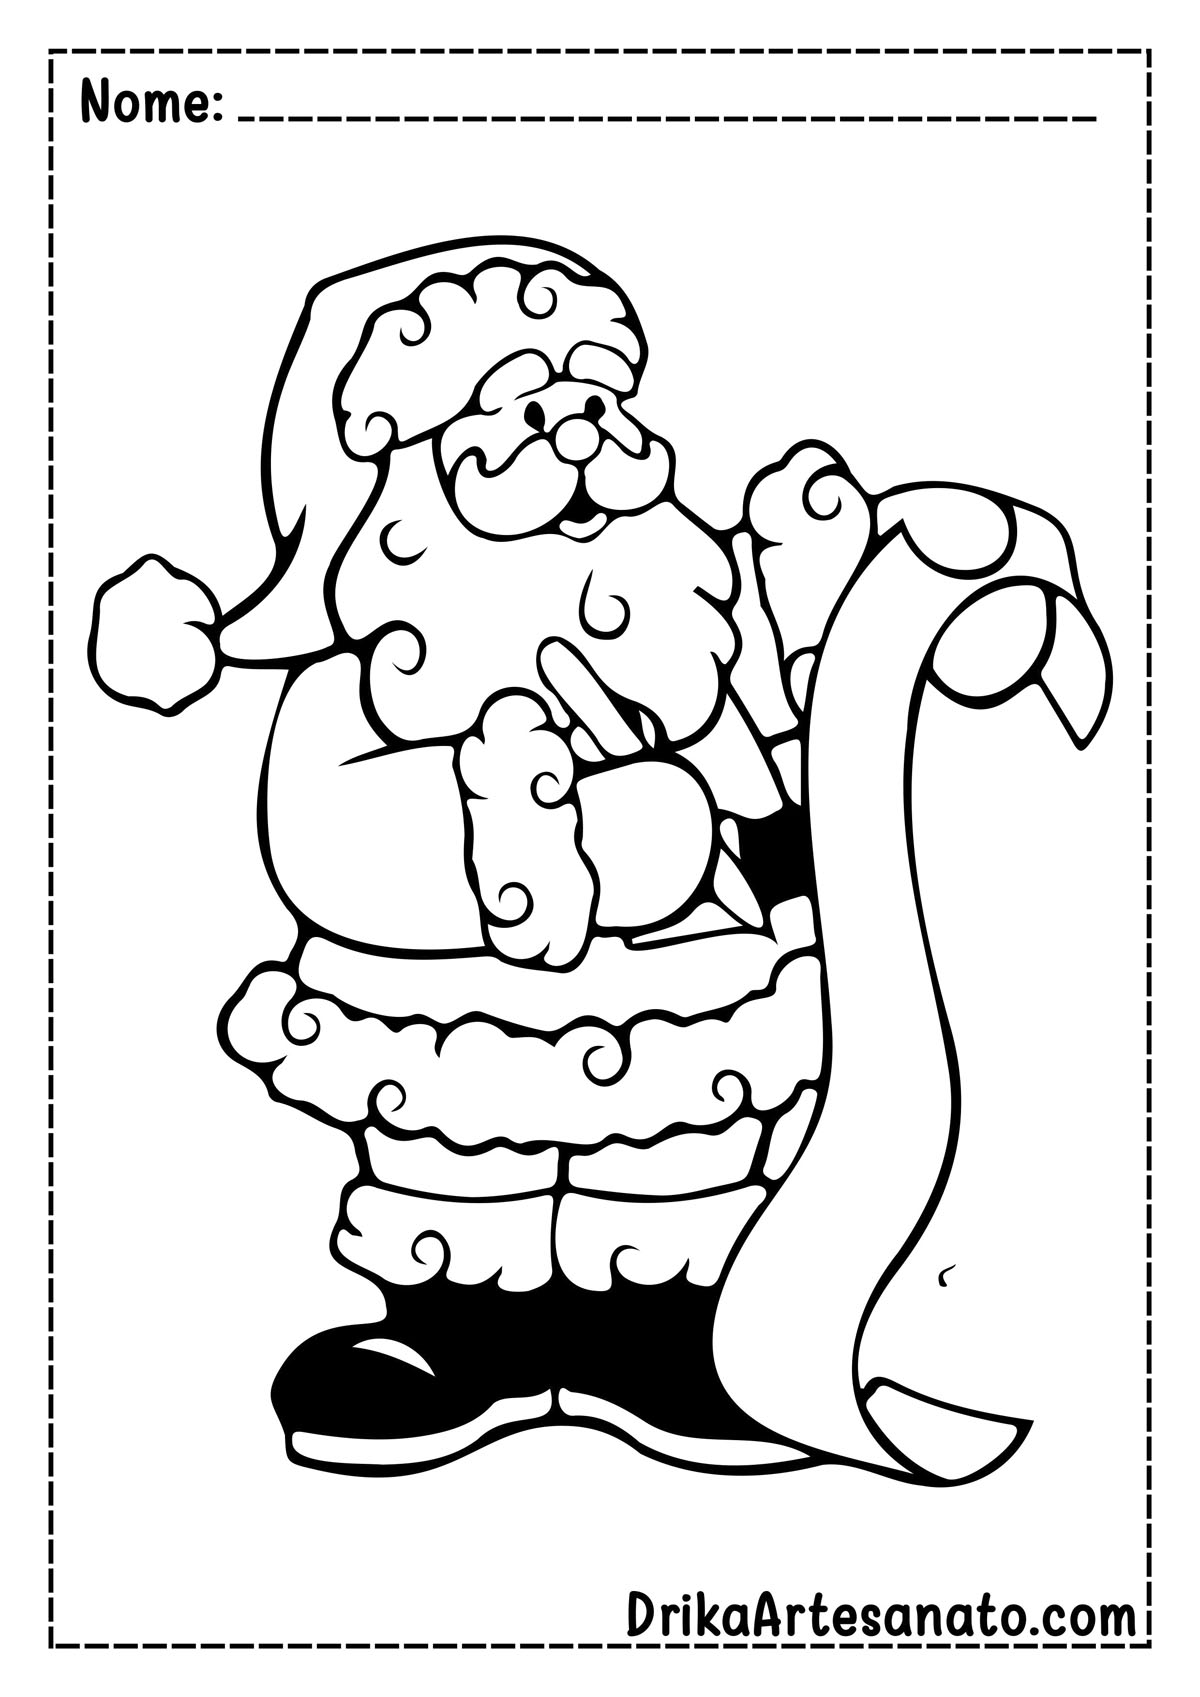 Desenho de Papai Noel para Imprimir e Colorir